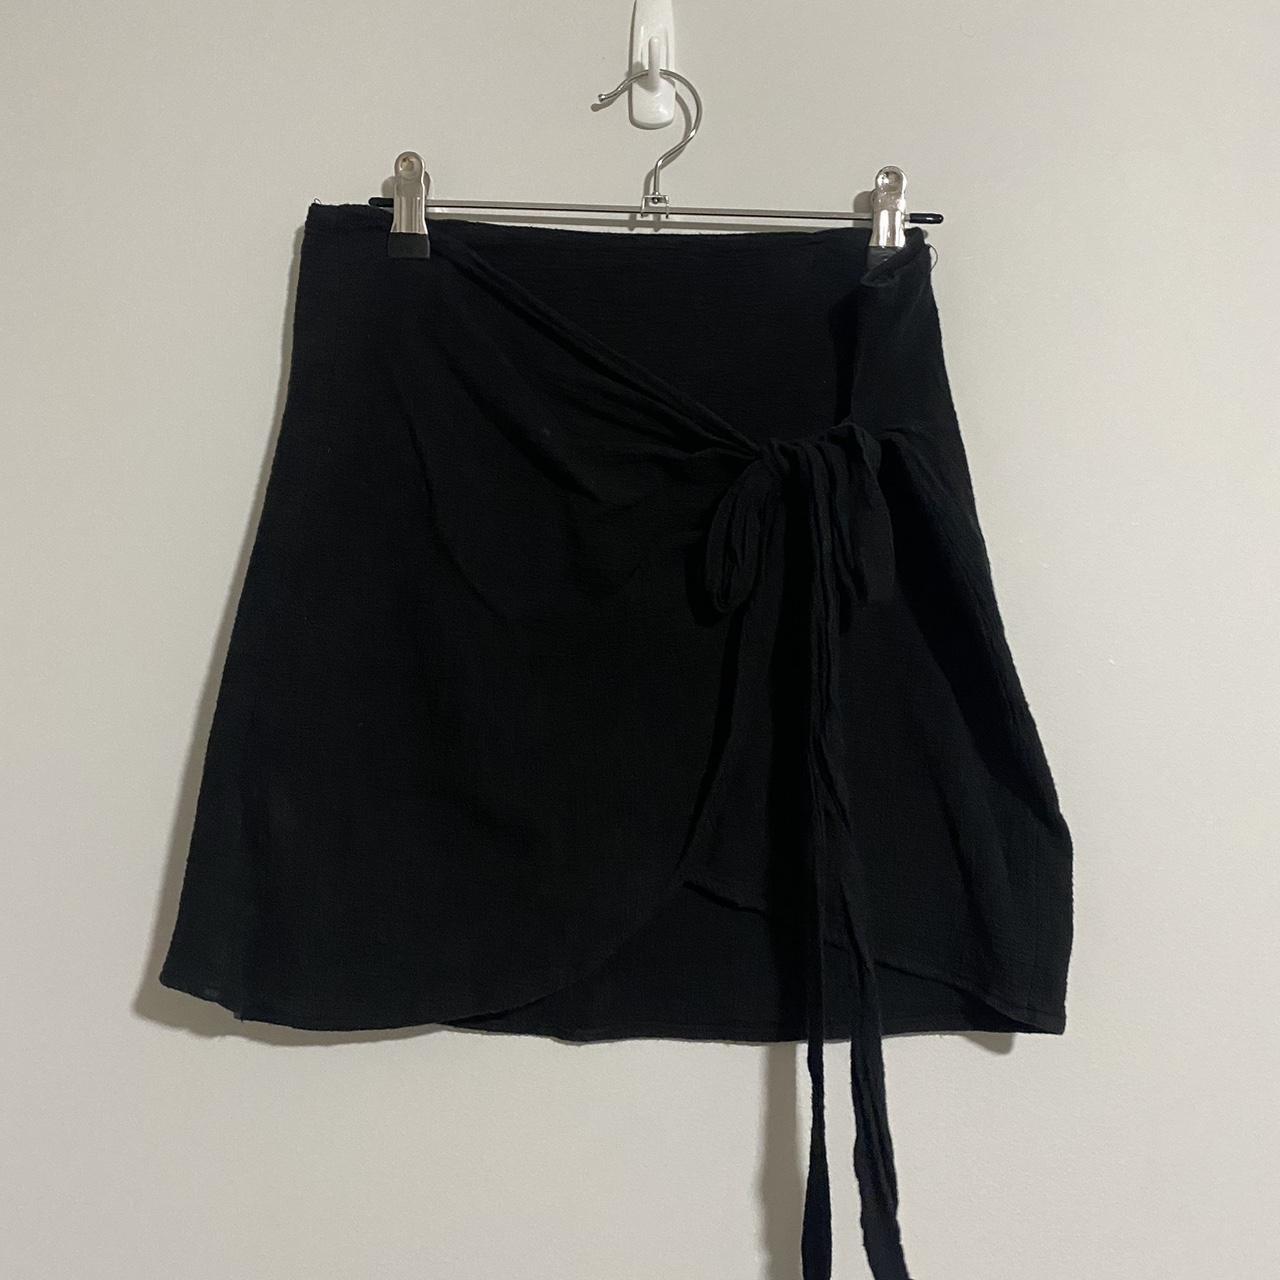 black wrap skirt with tie, size M - Depop